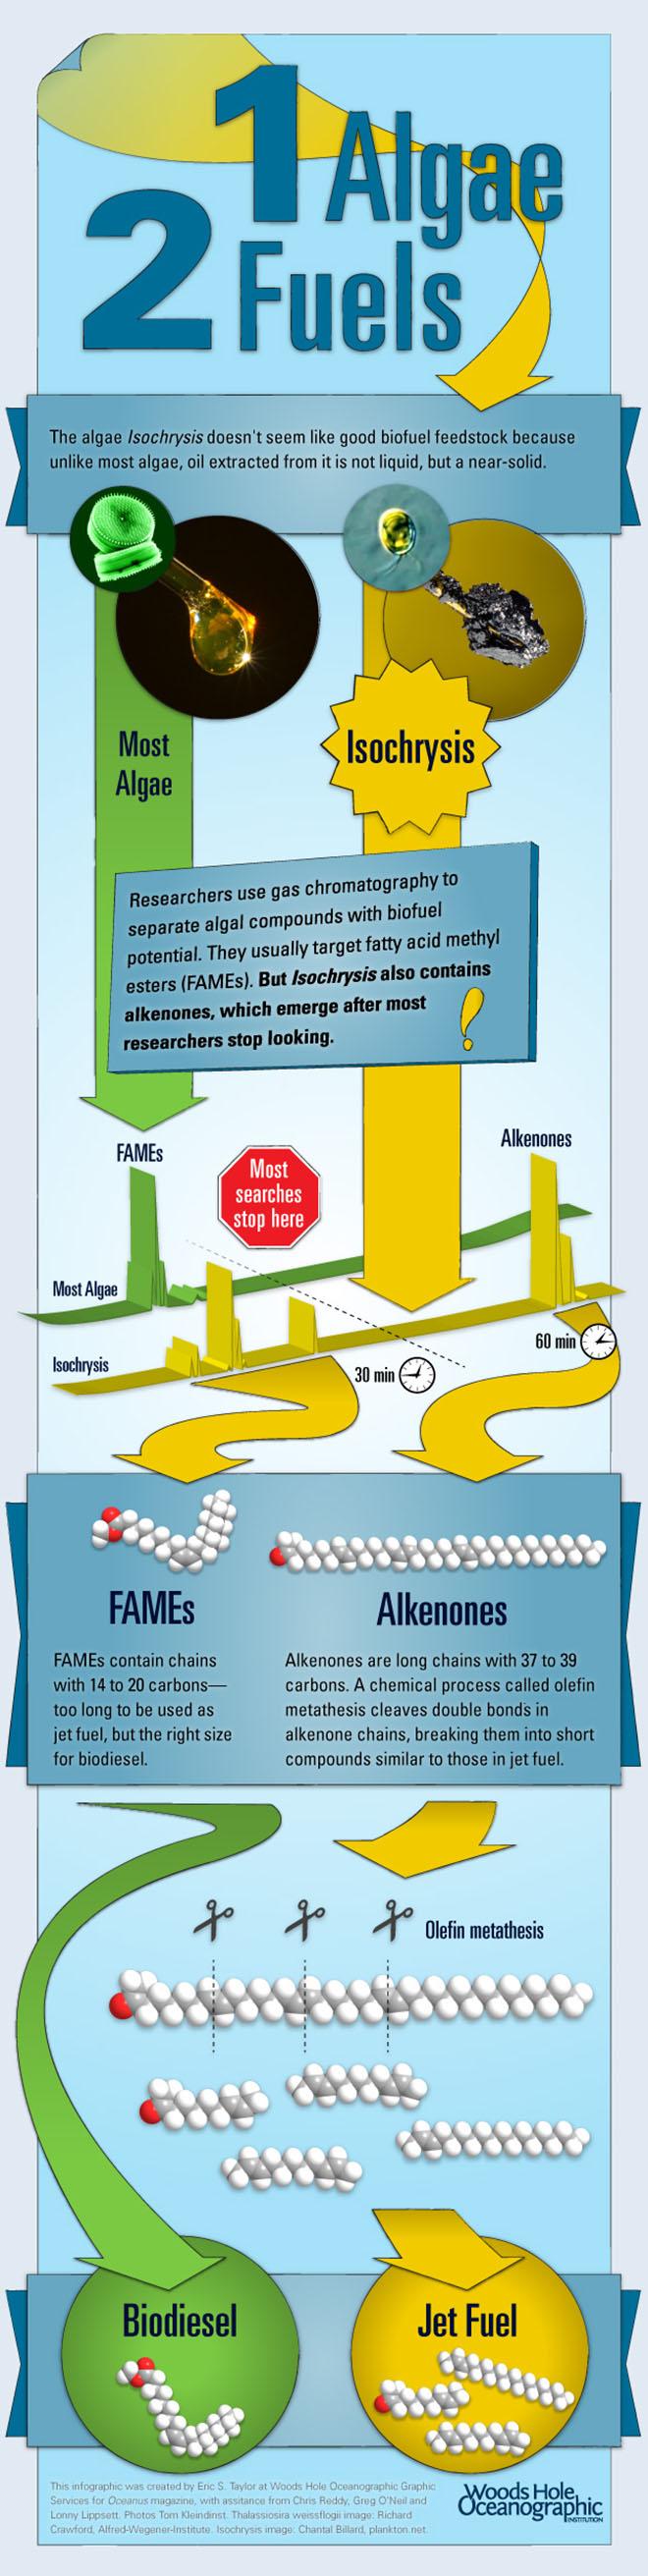 Jet Fuel from Algae? © Woods Hole Oceanographic Institution (WHOI) http://www.whoi.edu/